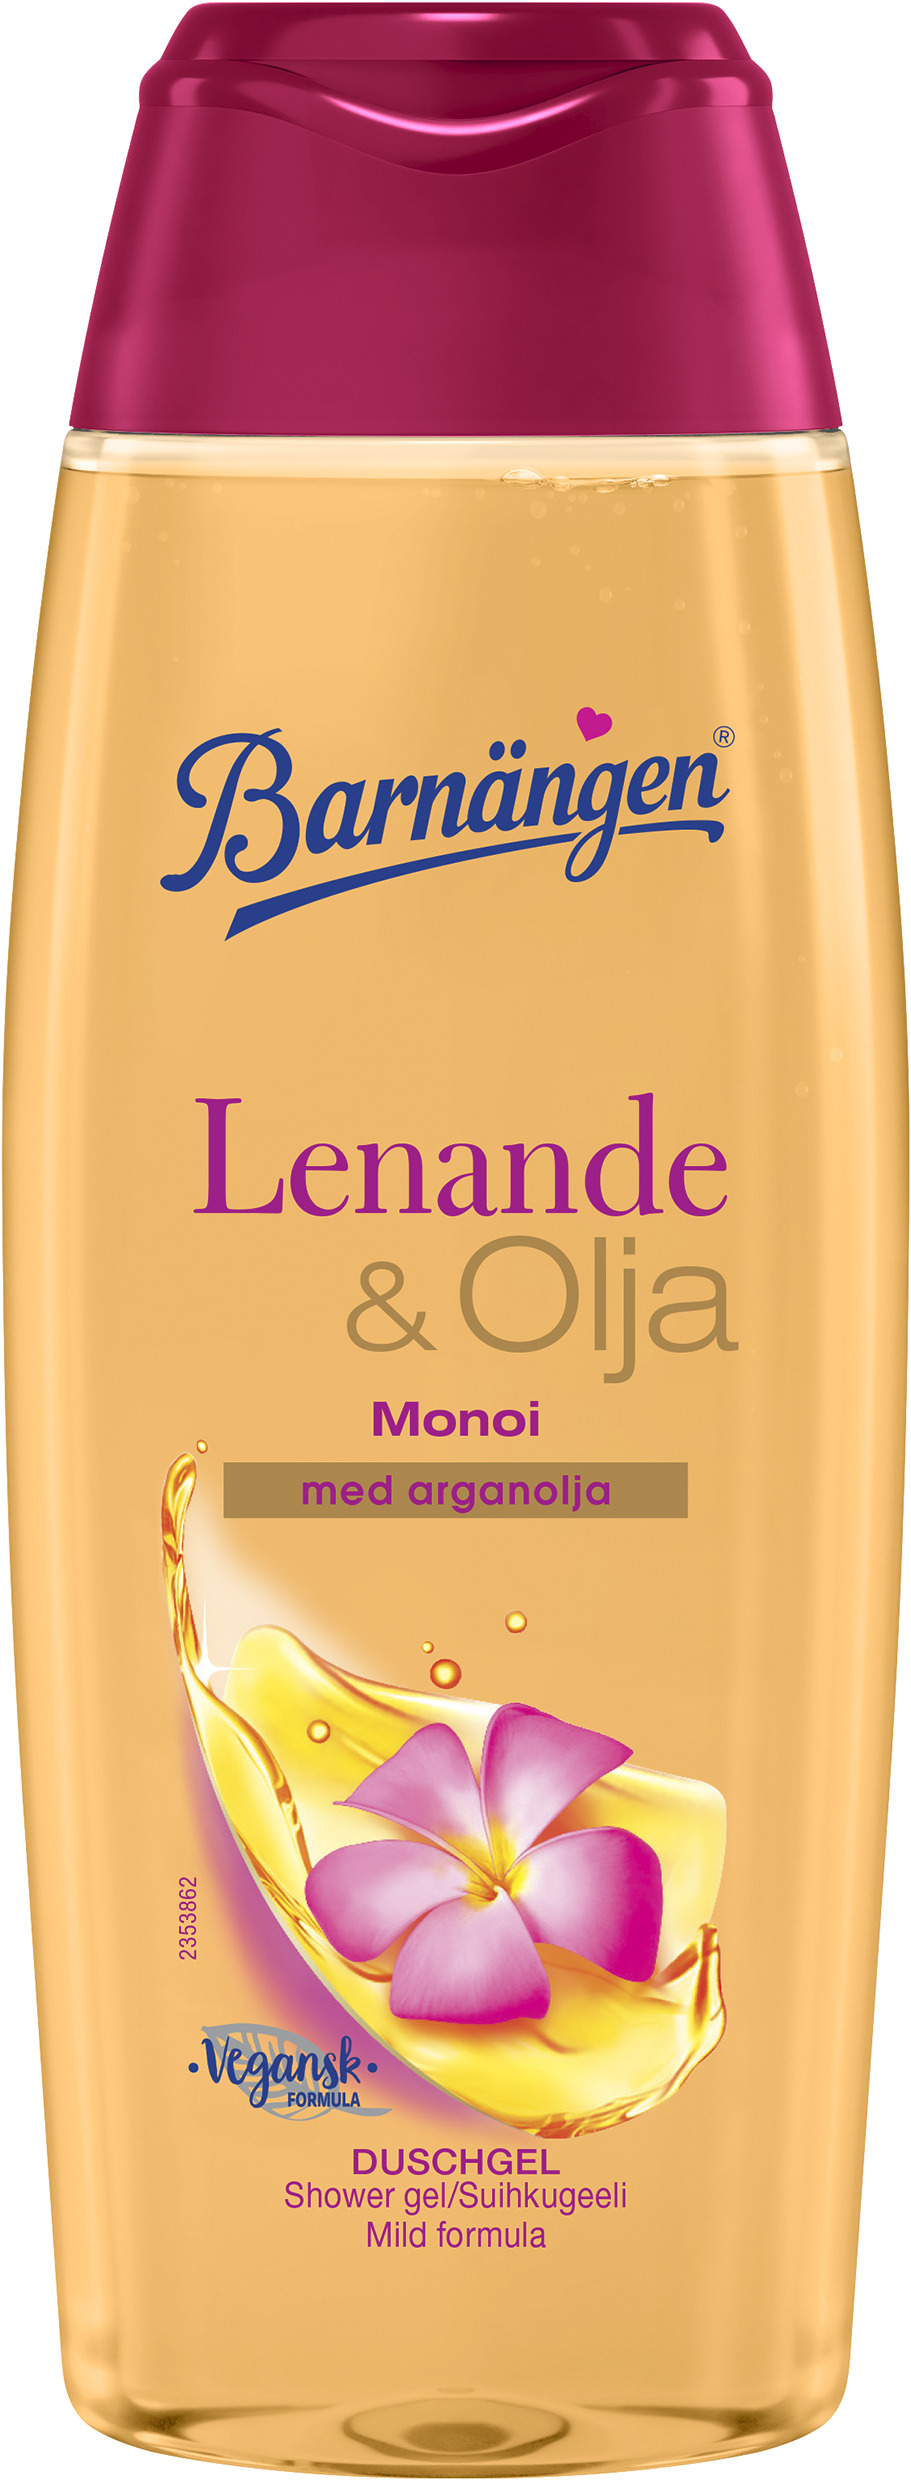 Barnängen Lenande & Oja Monoi Duschgel 250 ml